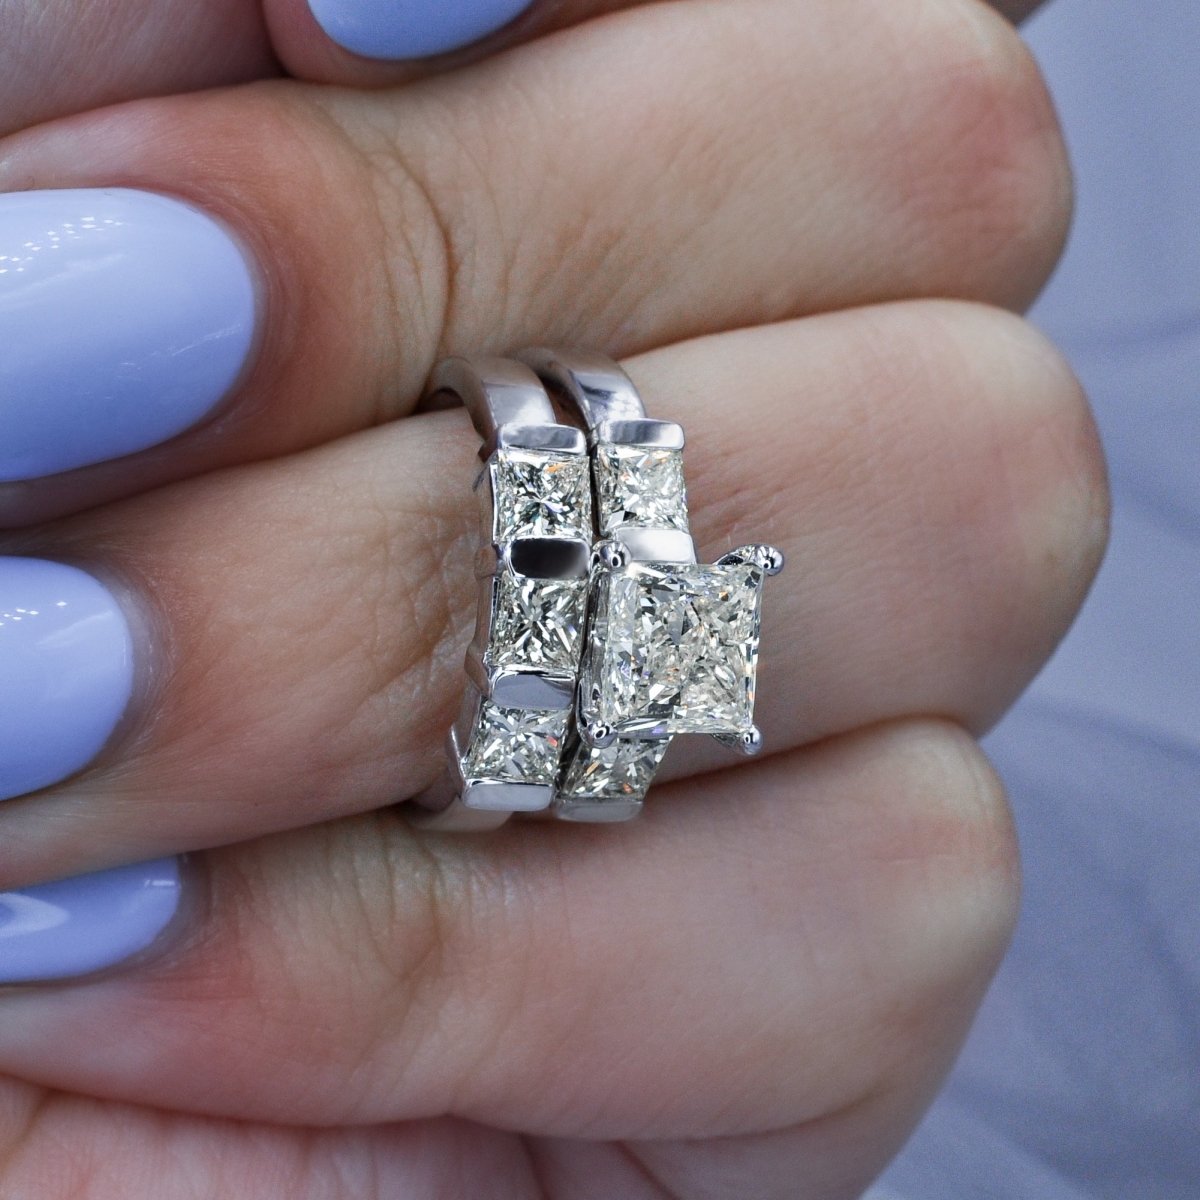 Special 3.05CT Princess Cut Diamond Bridal Set in 14KT White Gold - Primestyle.com